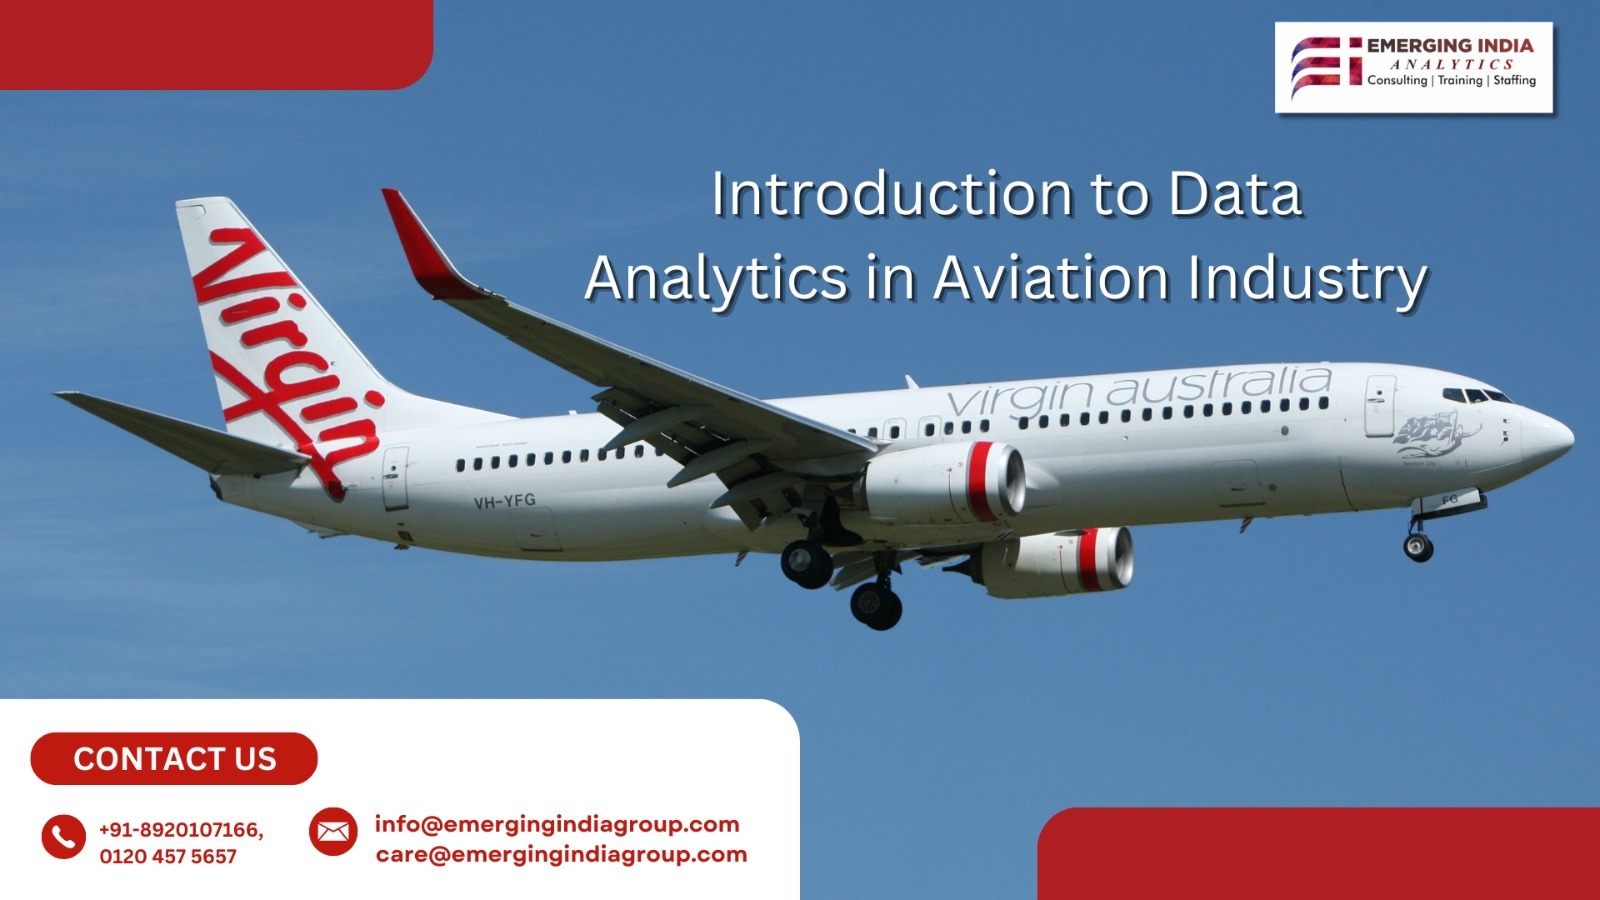 Data analytics in aviation industry